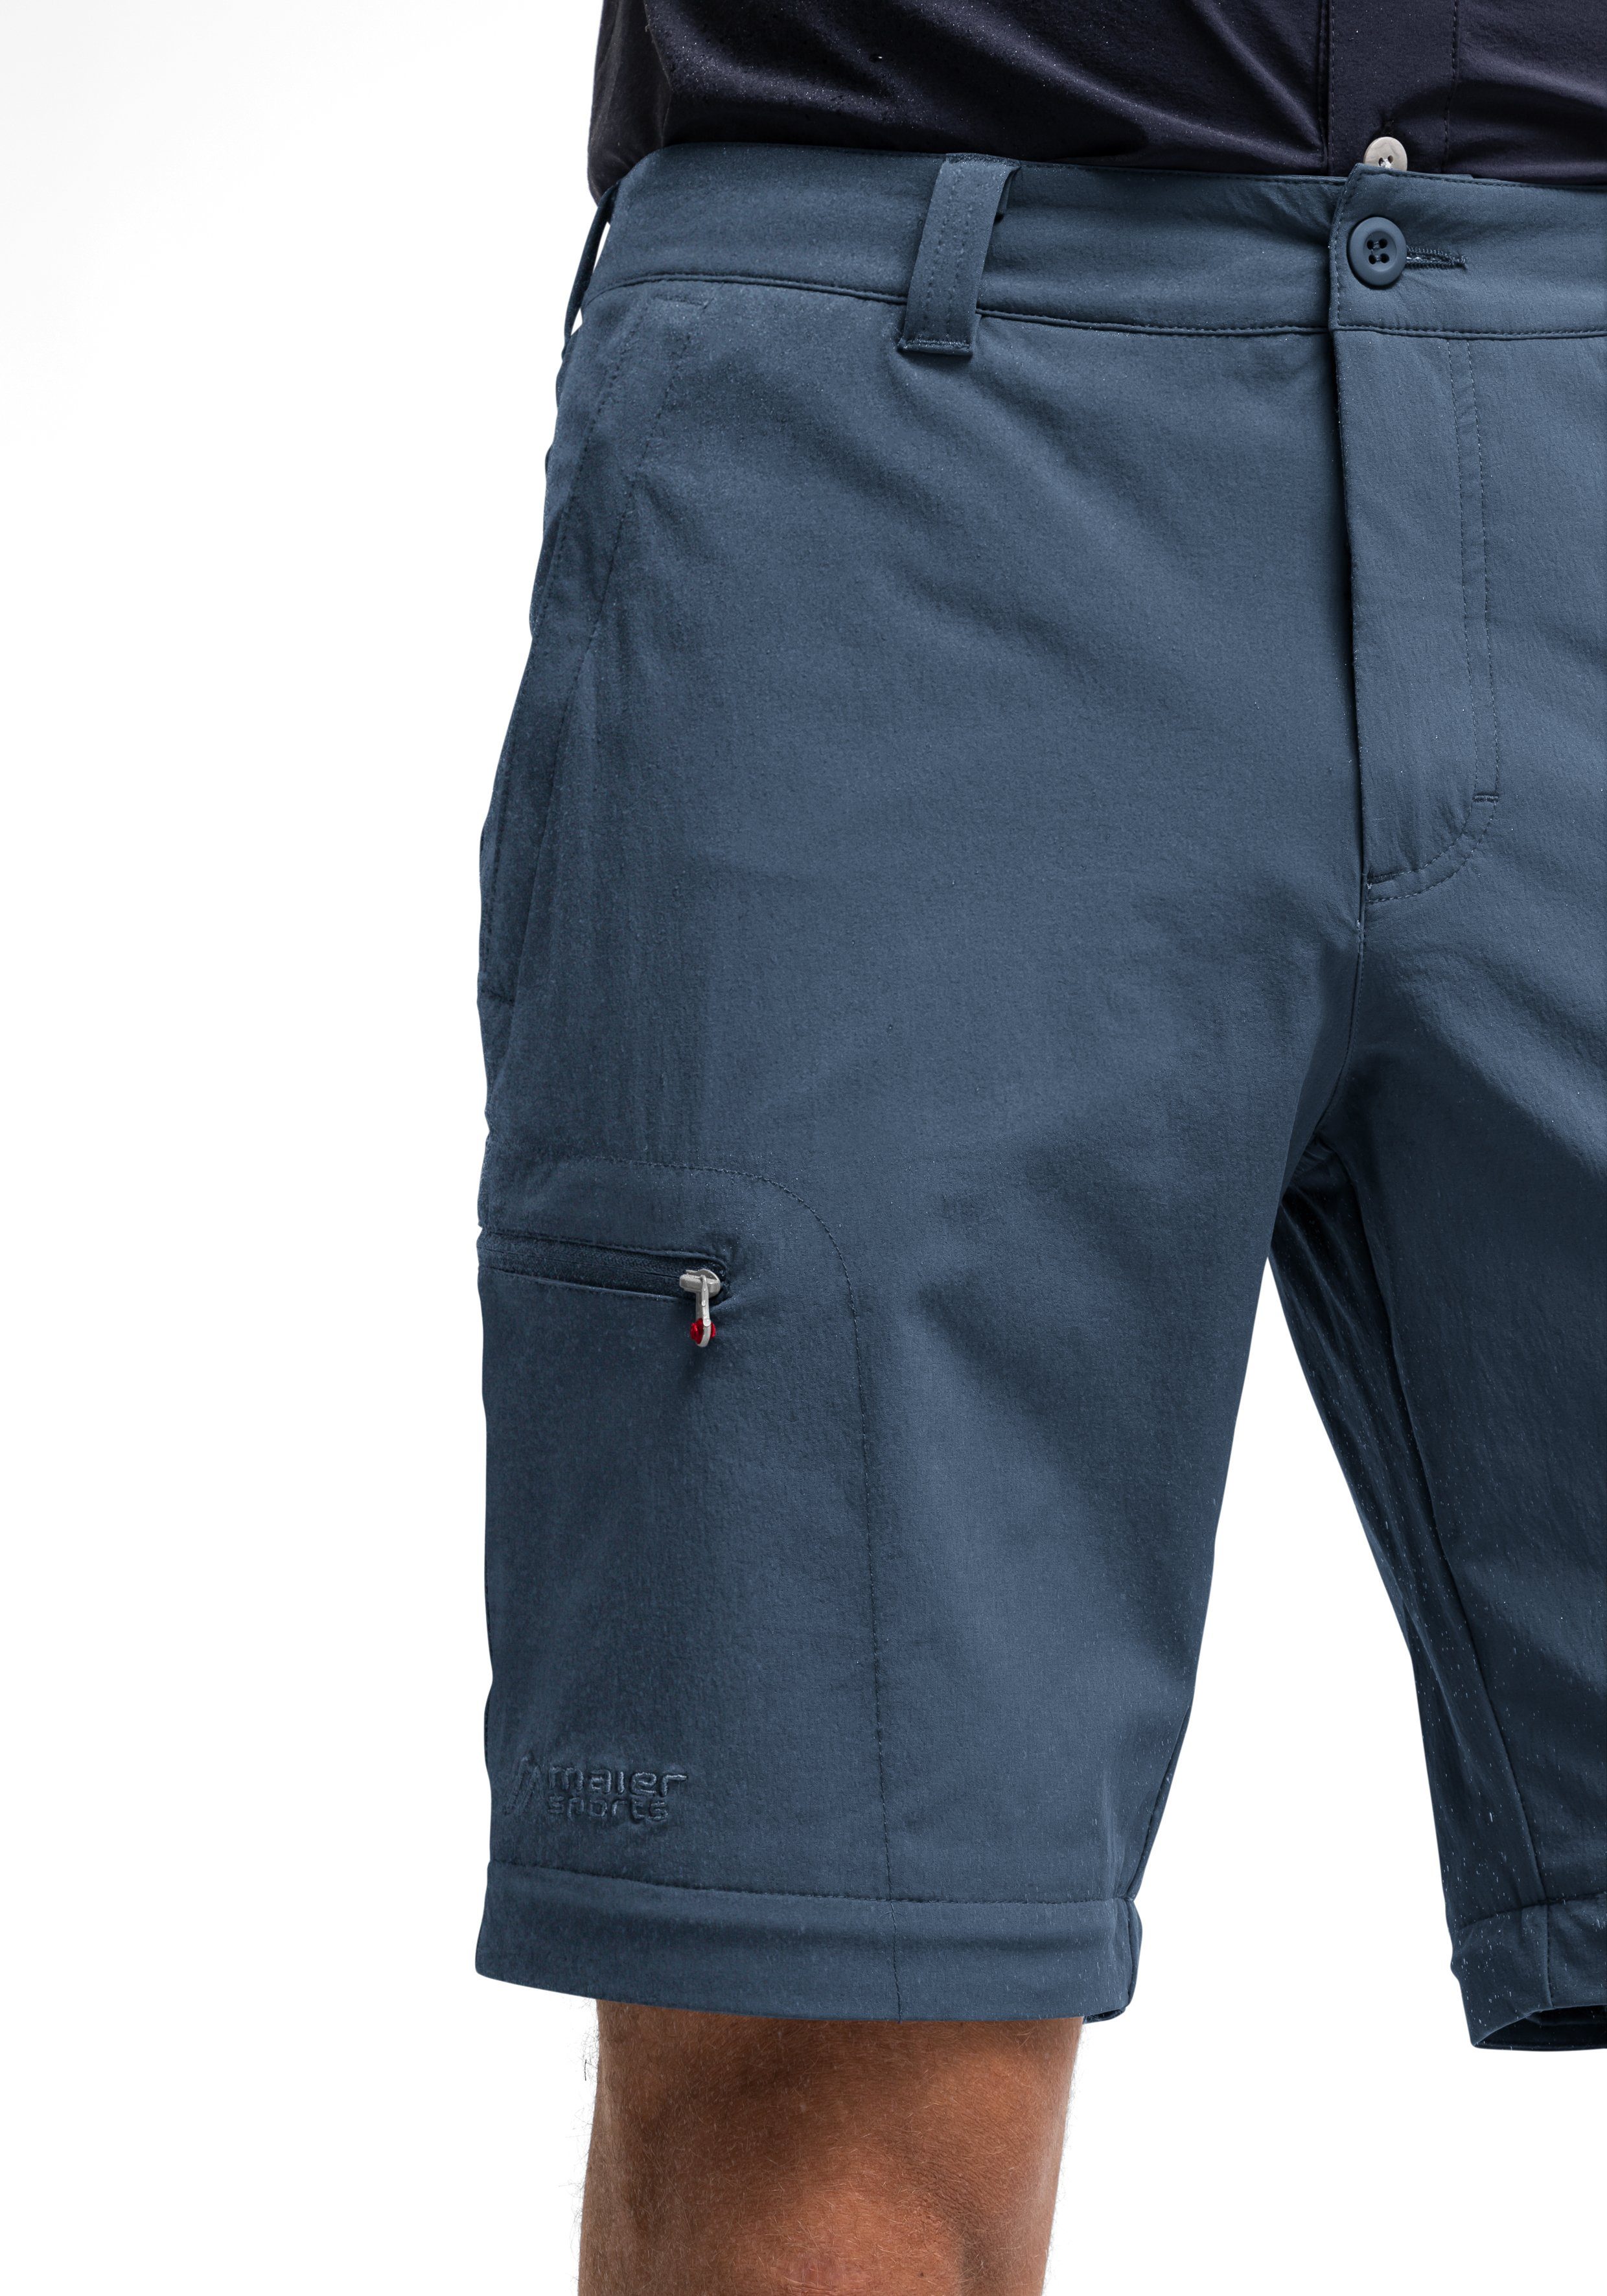 Herren Funktionshose zipp-off Tajo Maier atmungsaktive Outdoor-Hose jeansblau Wanderhose, Sports